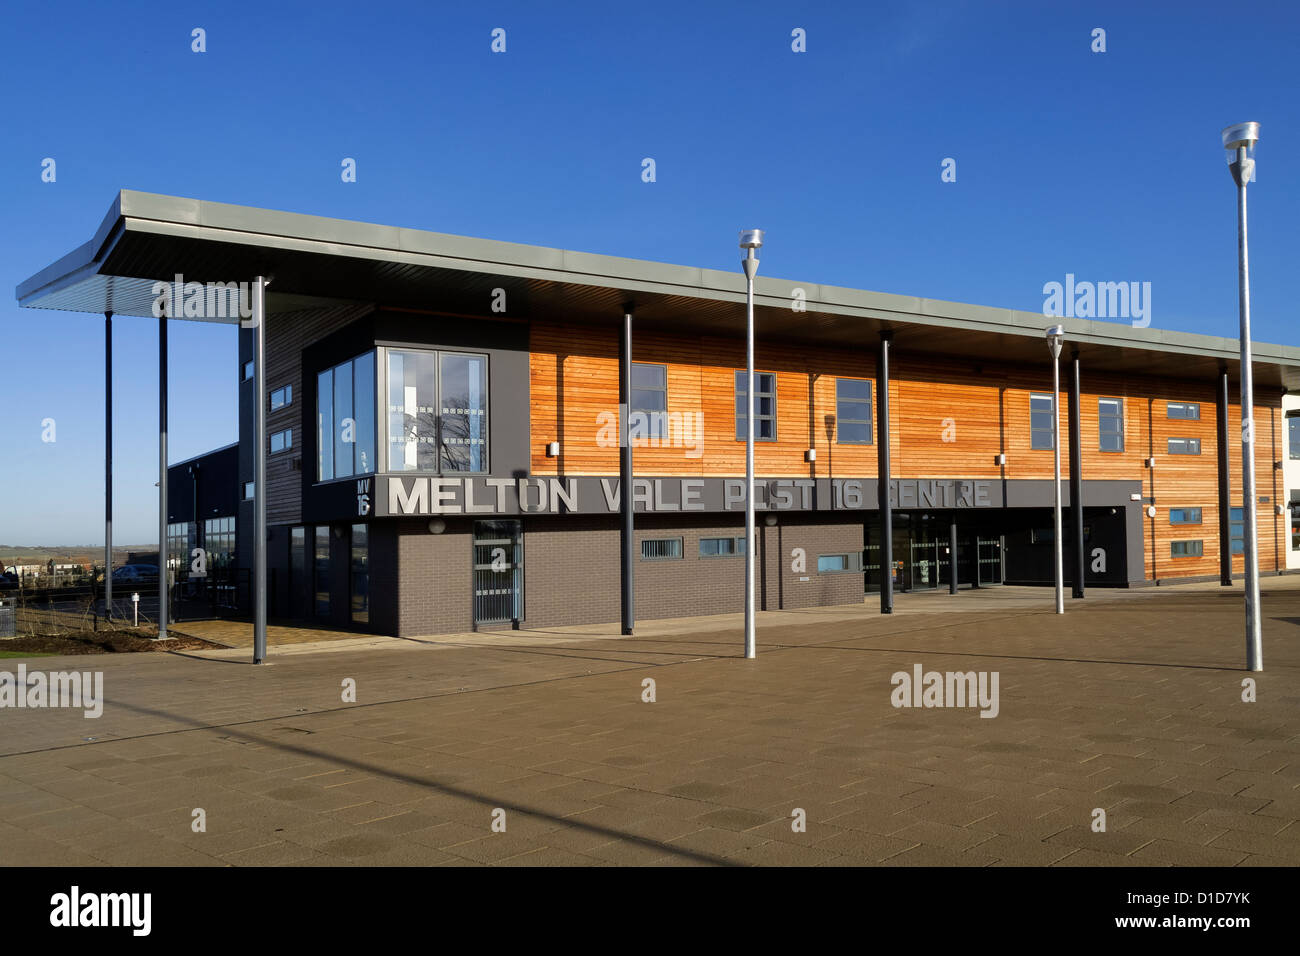 Melton Vale Post 16 Centro sixth form college, Melton Mowbray Leicestershire, England Regno Unito Foto Stock